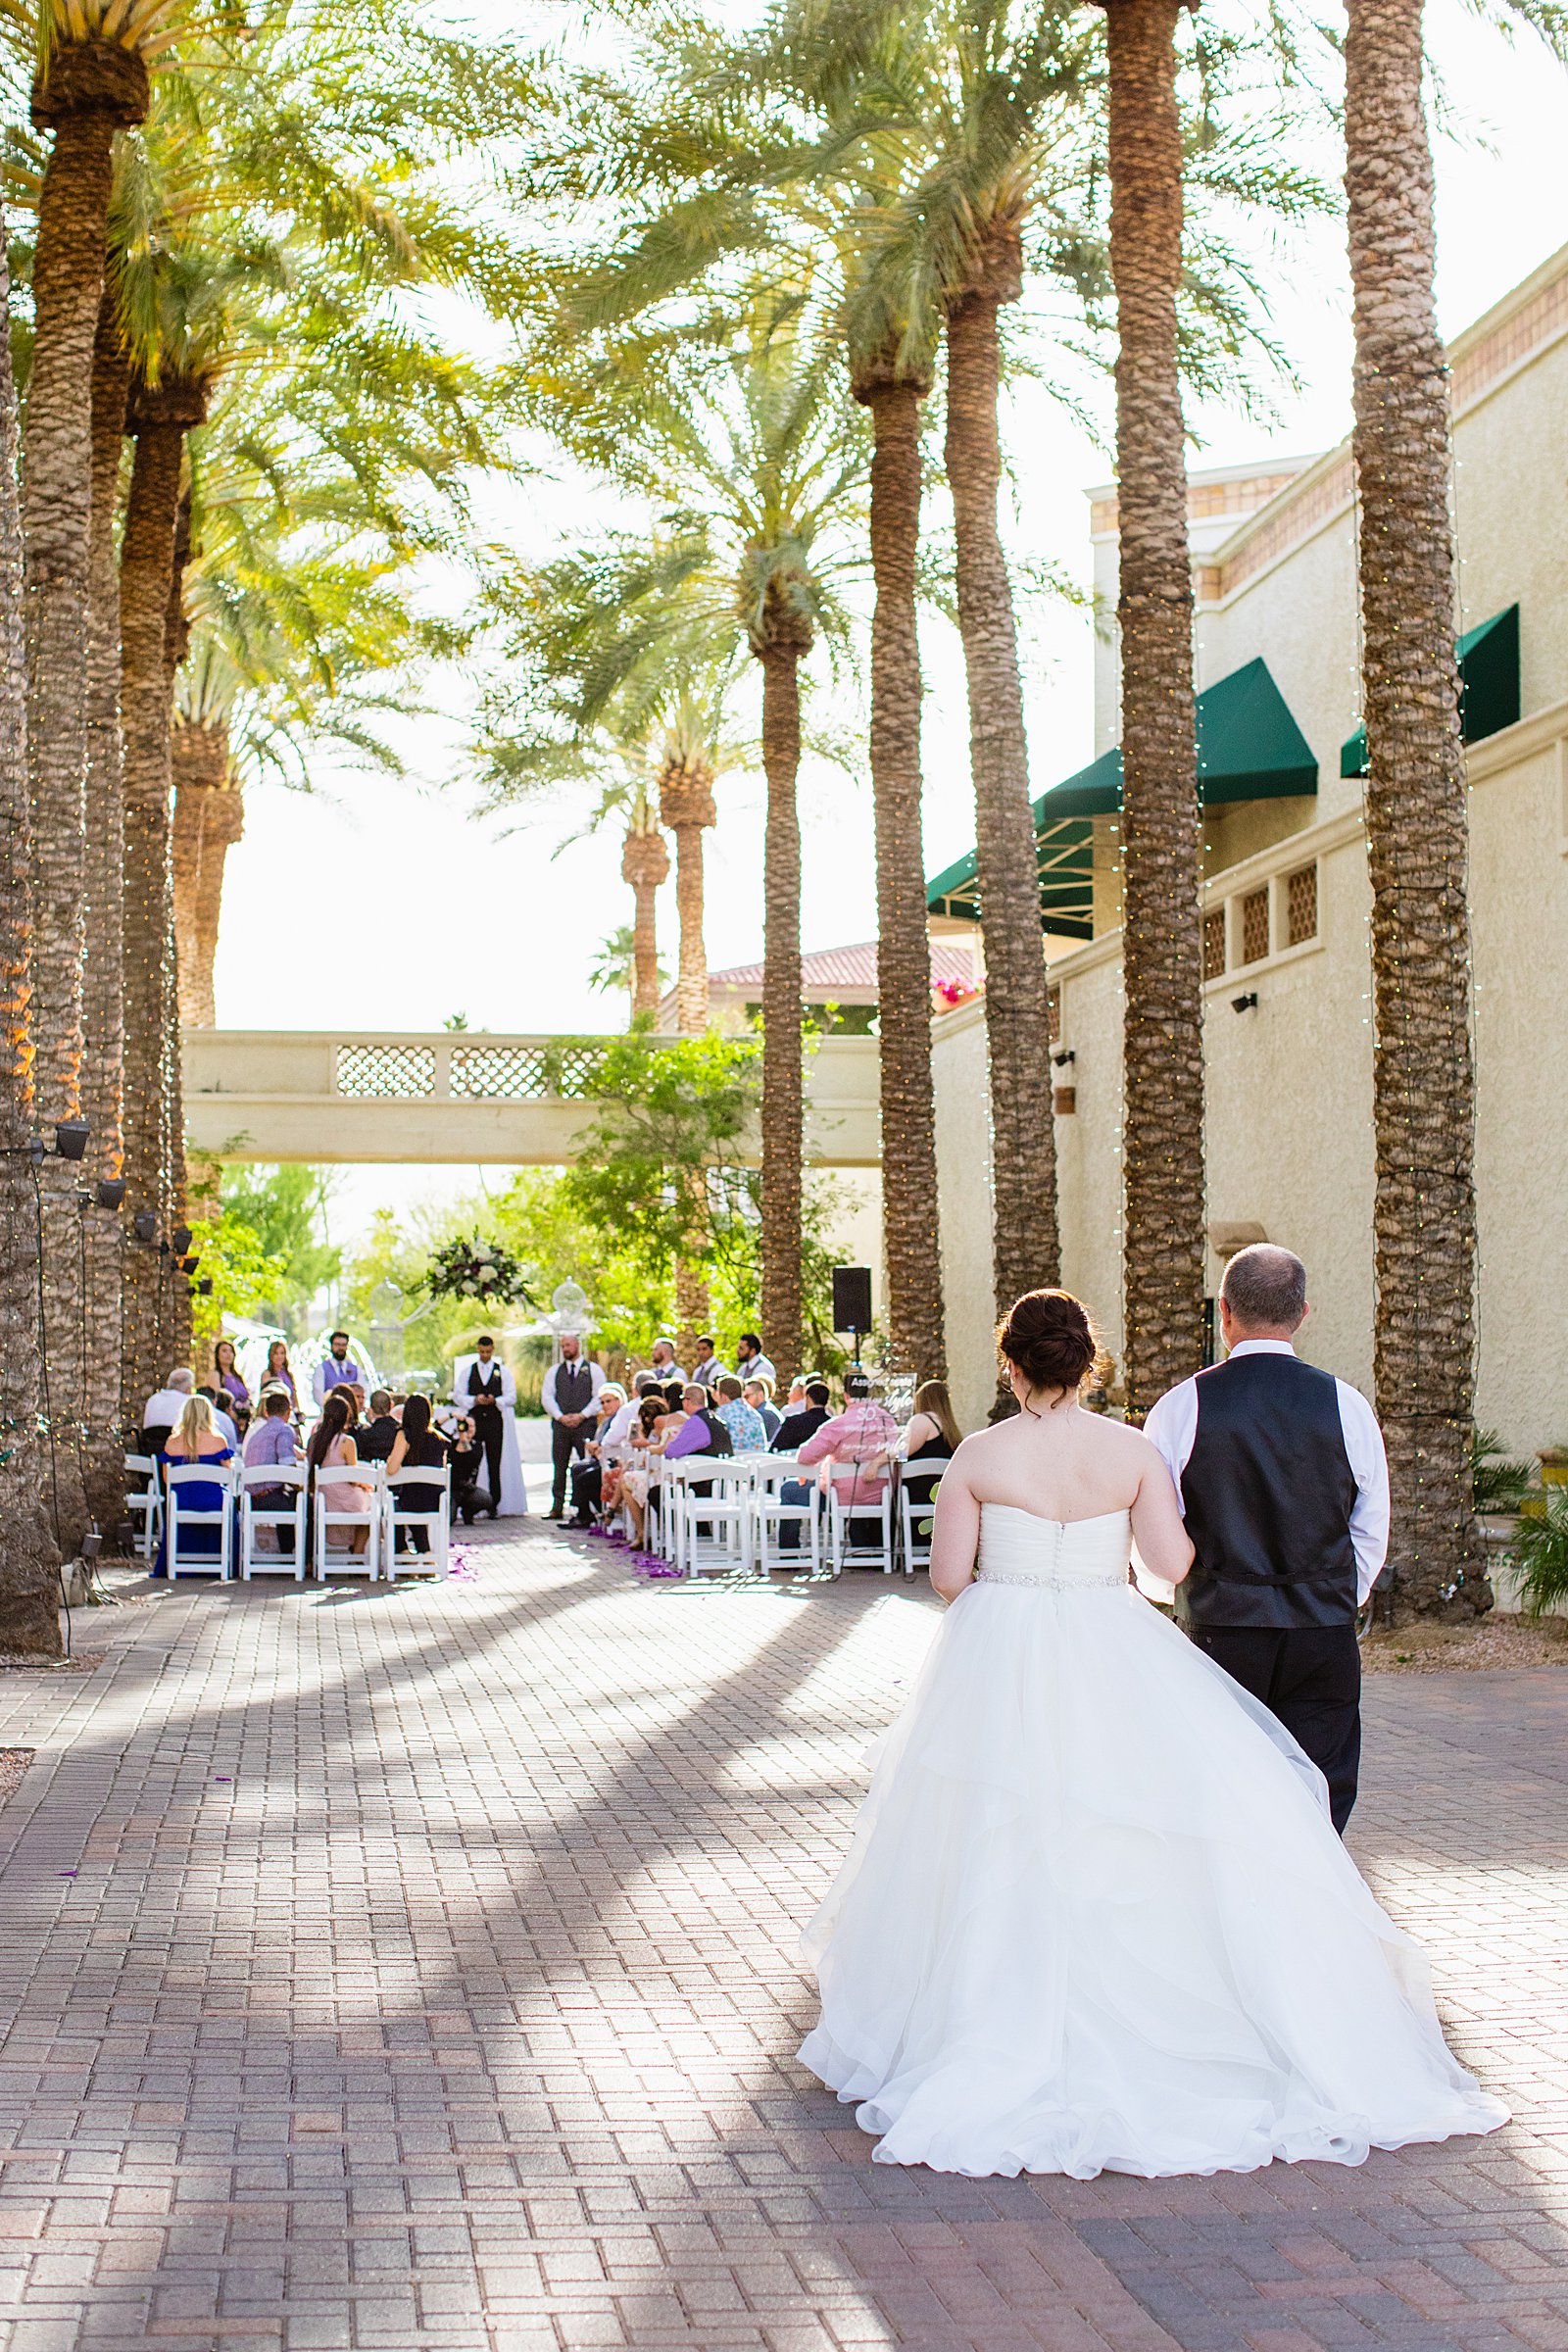 Bride walking down aisle during Arizona Grand Resort wedding ceremony by Phoenix wedding photographer PMA Photography.